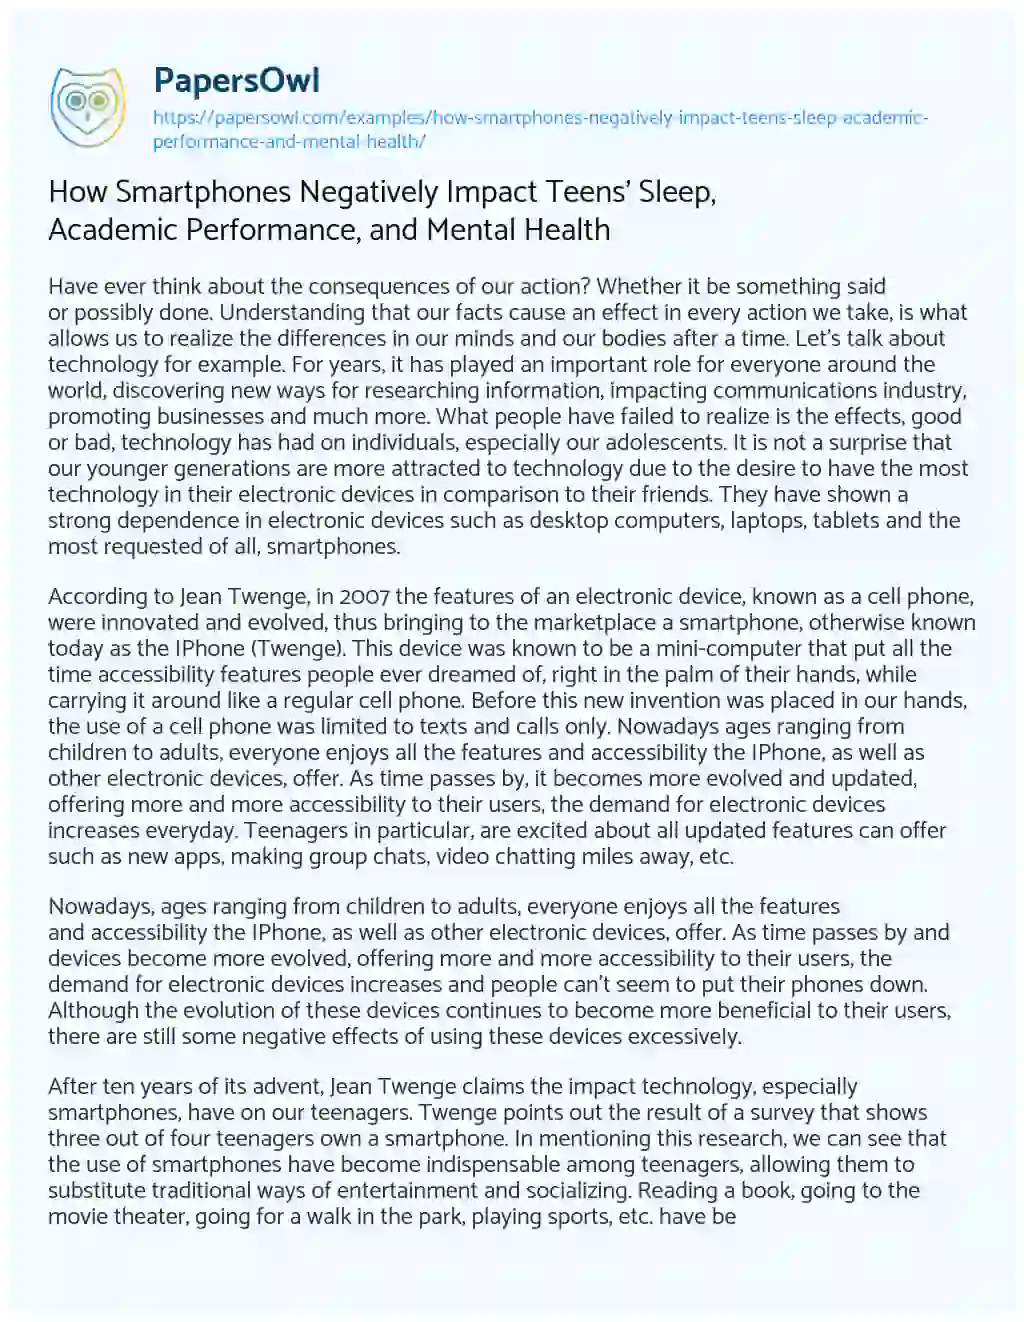 Essay on How Smartphones Negatively Impact Teens’ Sleep, Academic Performance, and Mental Health